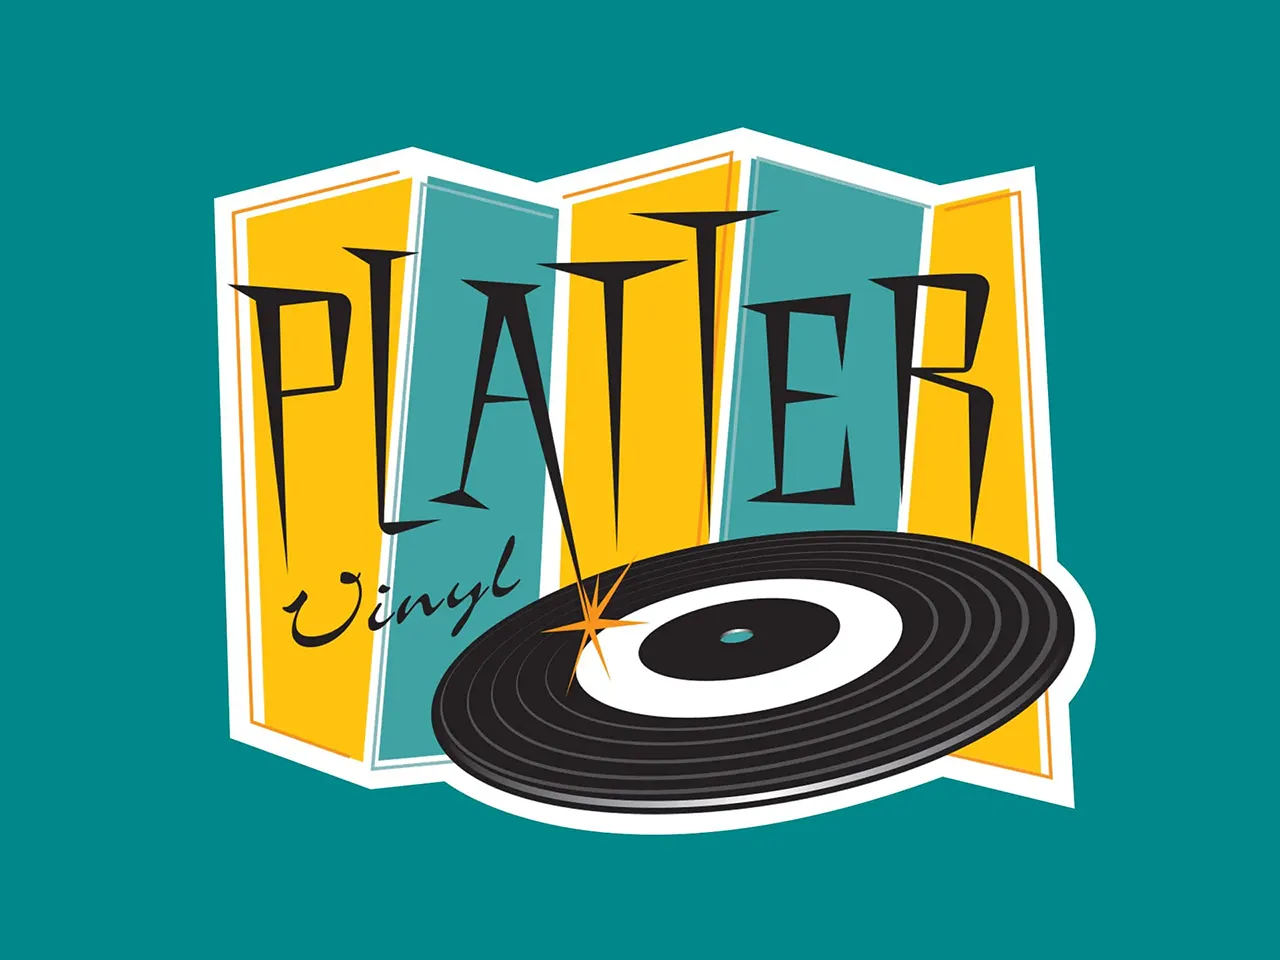 Platter Vinyl retro logo vinyl album